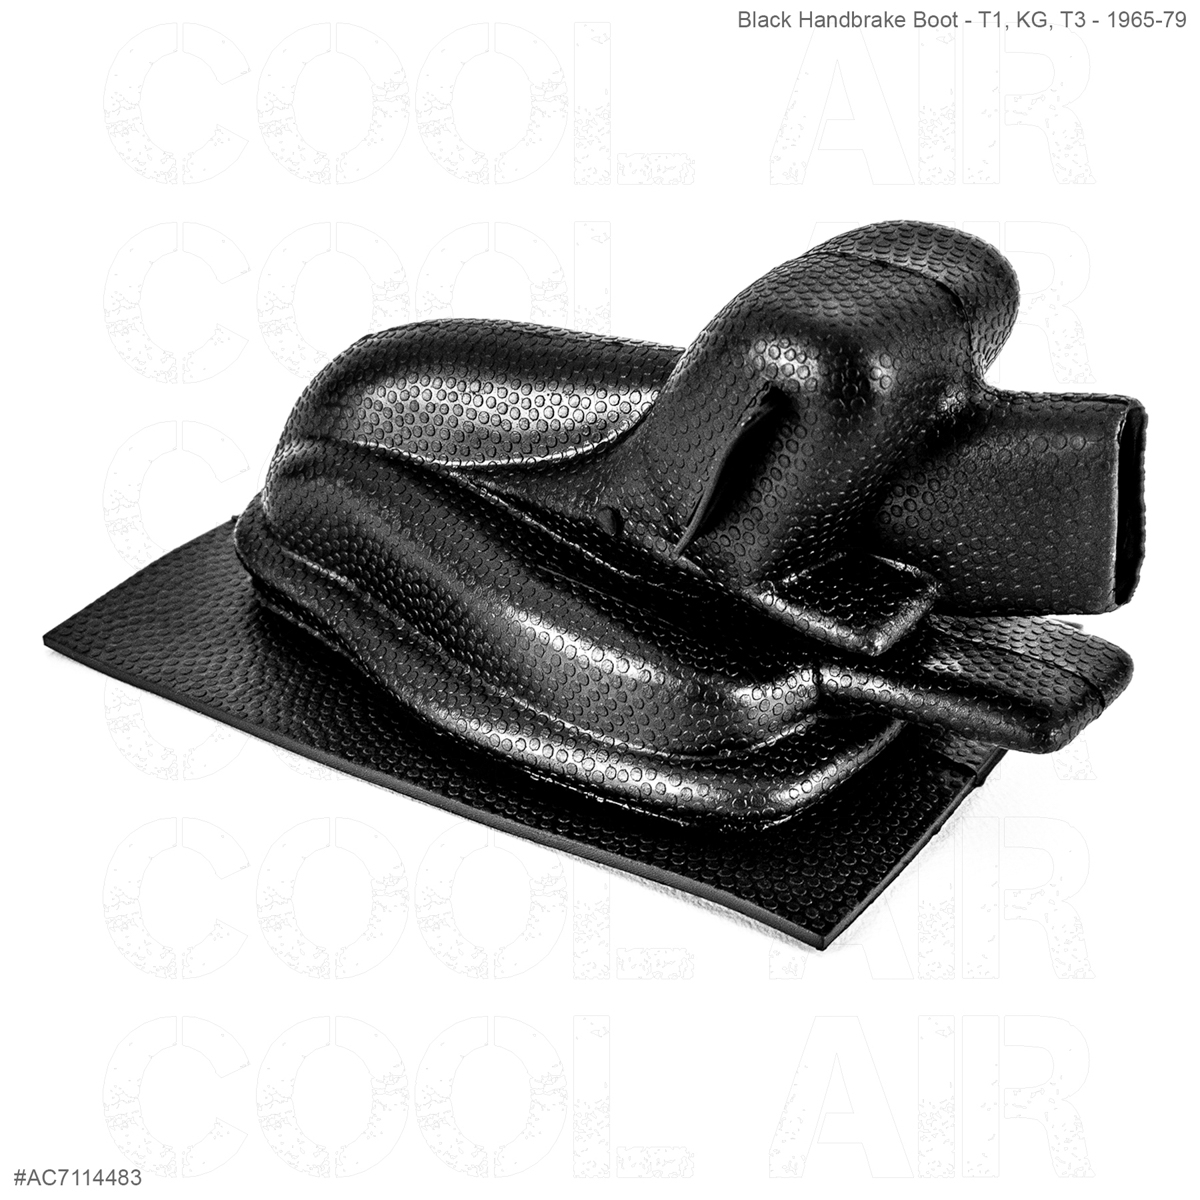 VW Beetle Black Handbrake Boot